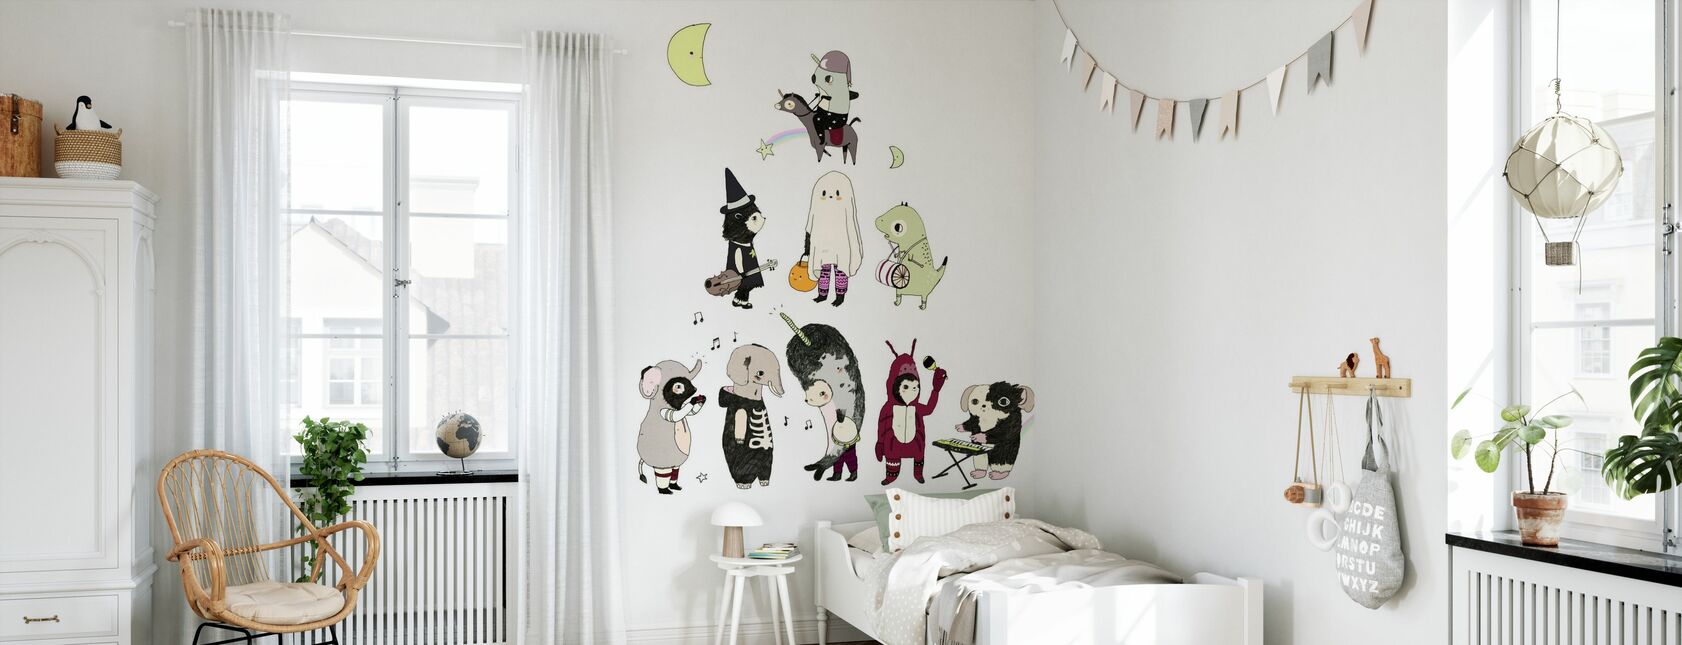 Costume Party - Wallpaper - Kids Room